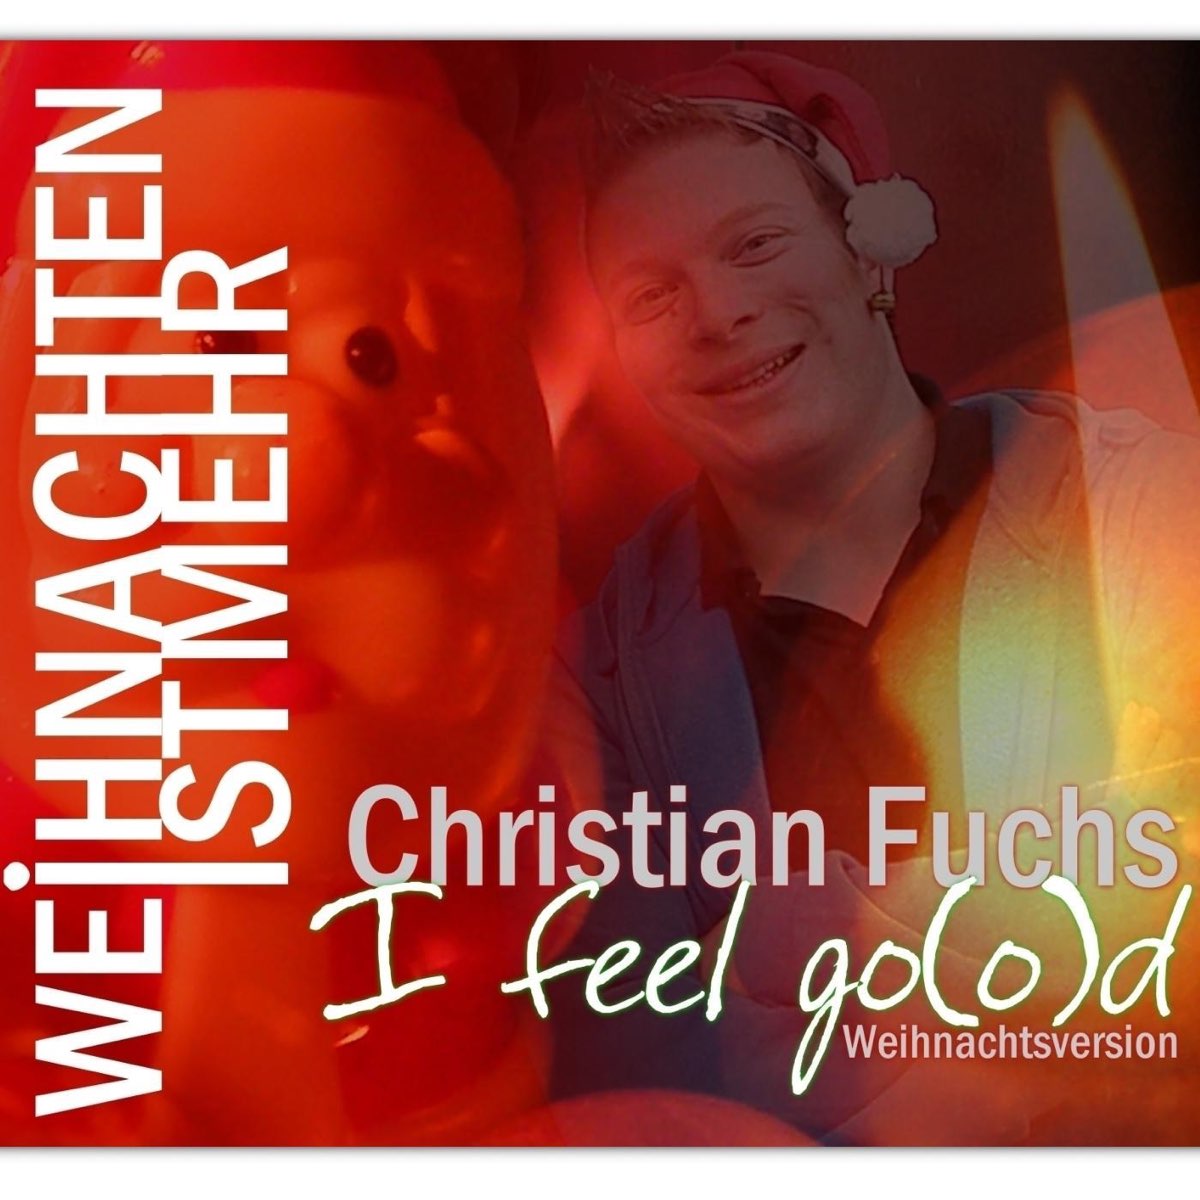 Feeling go песня. Christian Fuchs женщина.